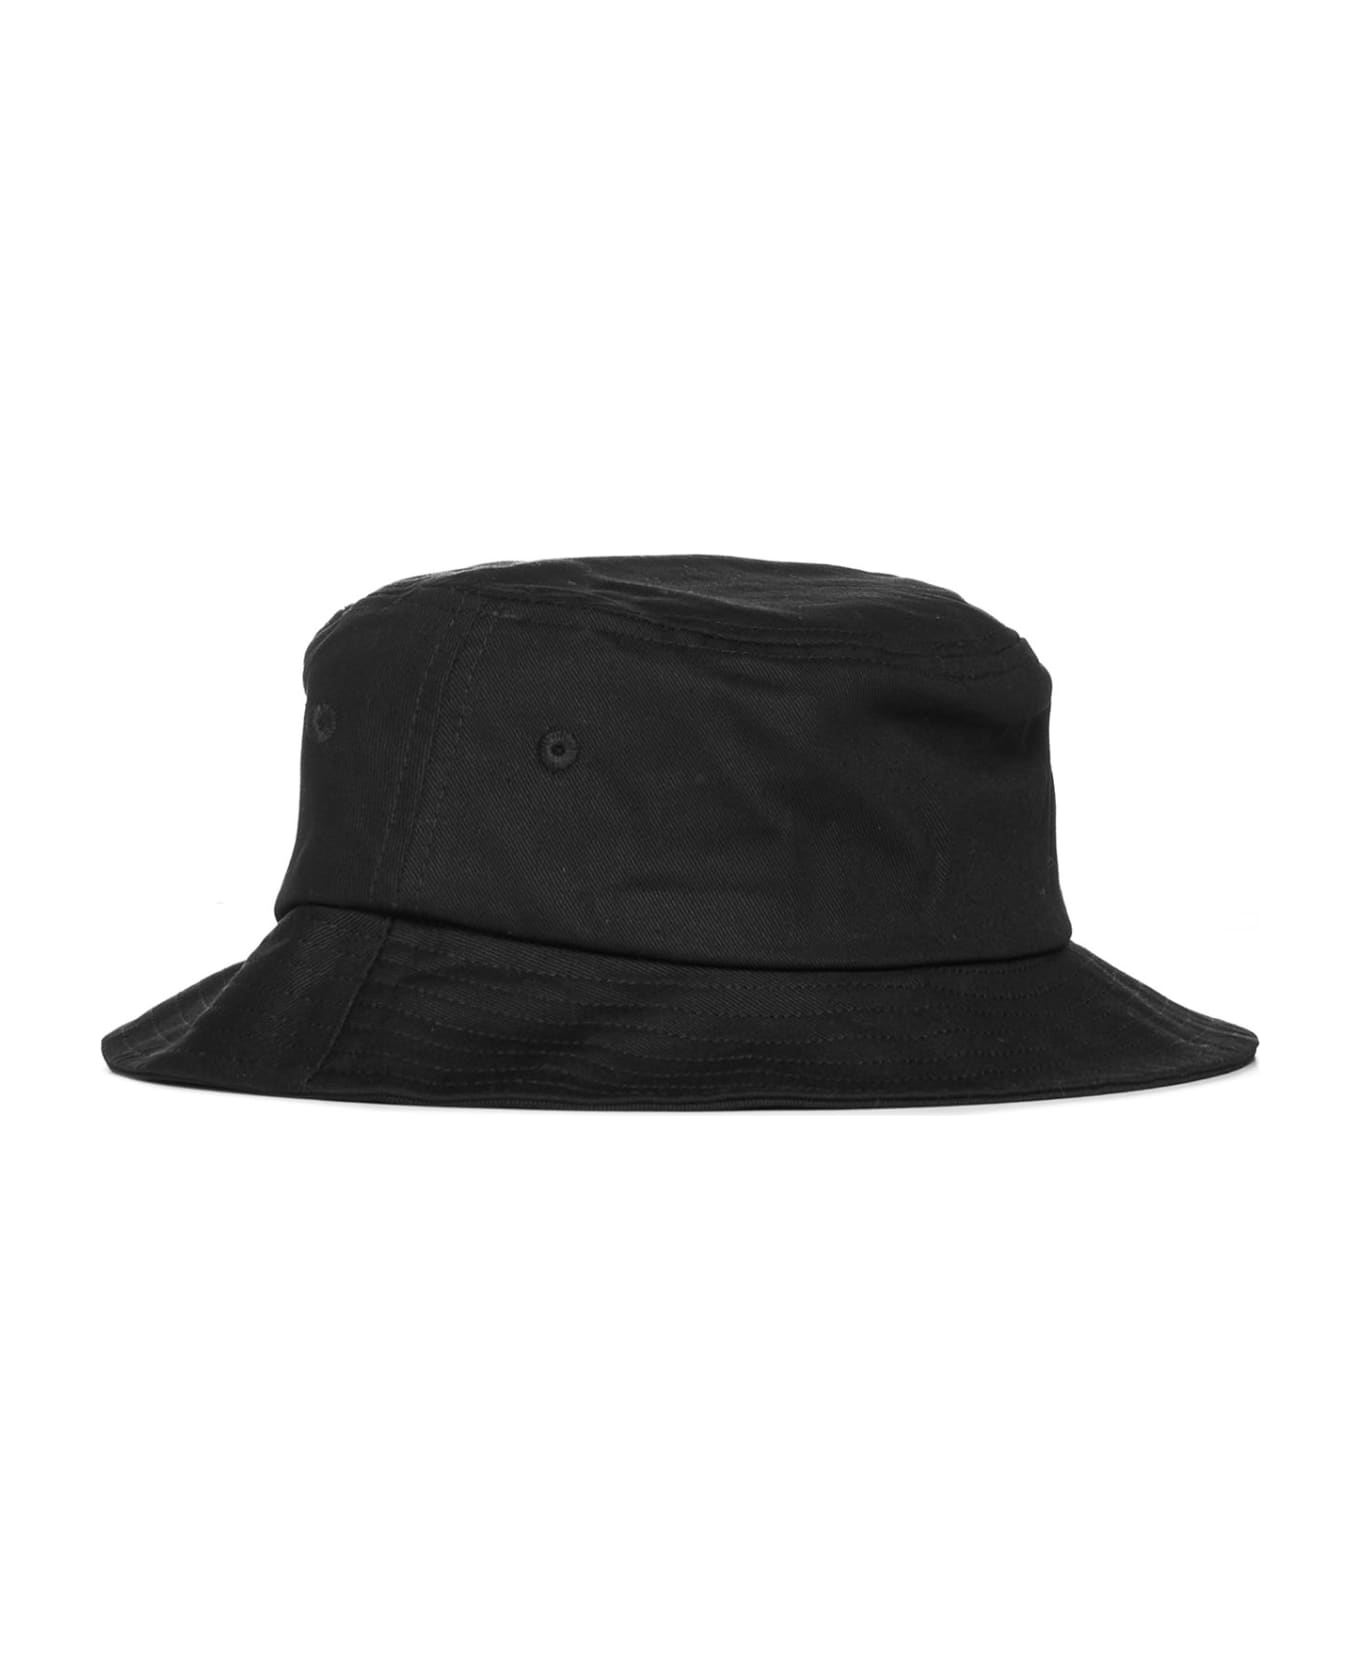 Kenzo Bucket Hat With Logo - Black 帽子